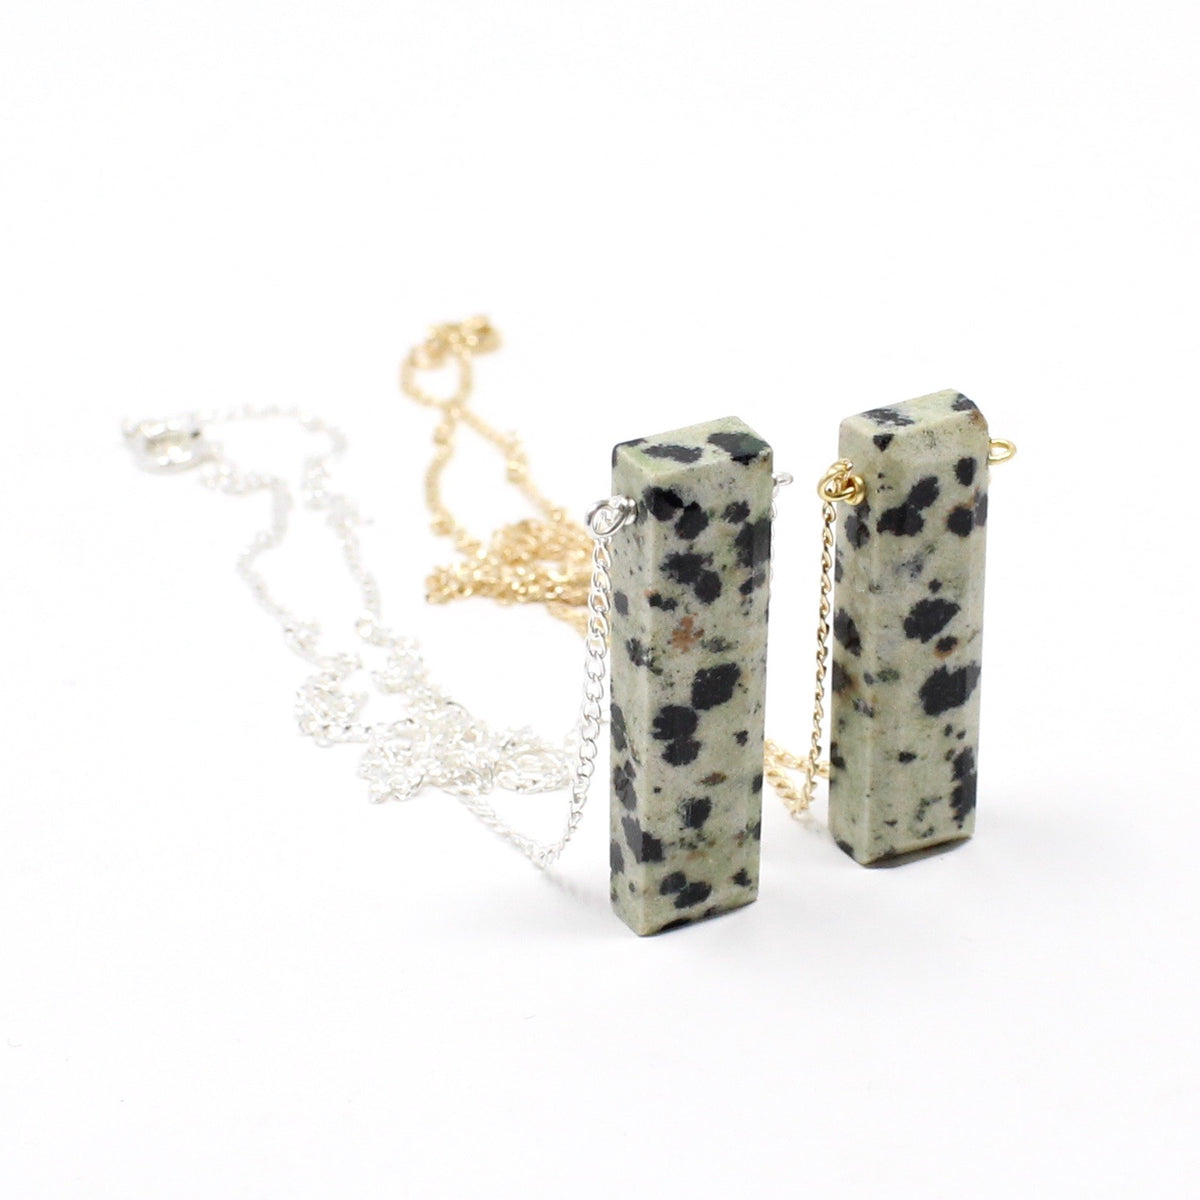 Dalmatian Necklace - Rectangle